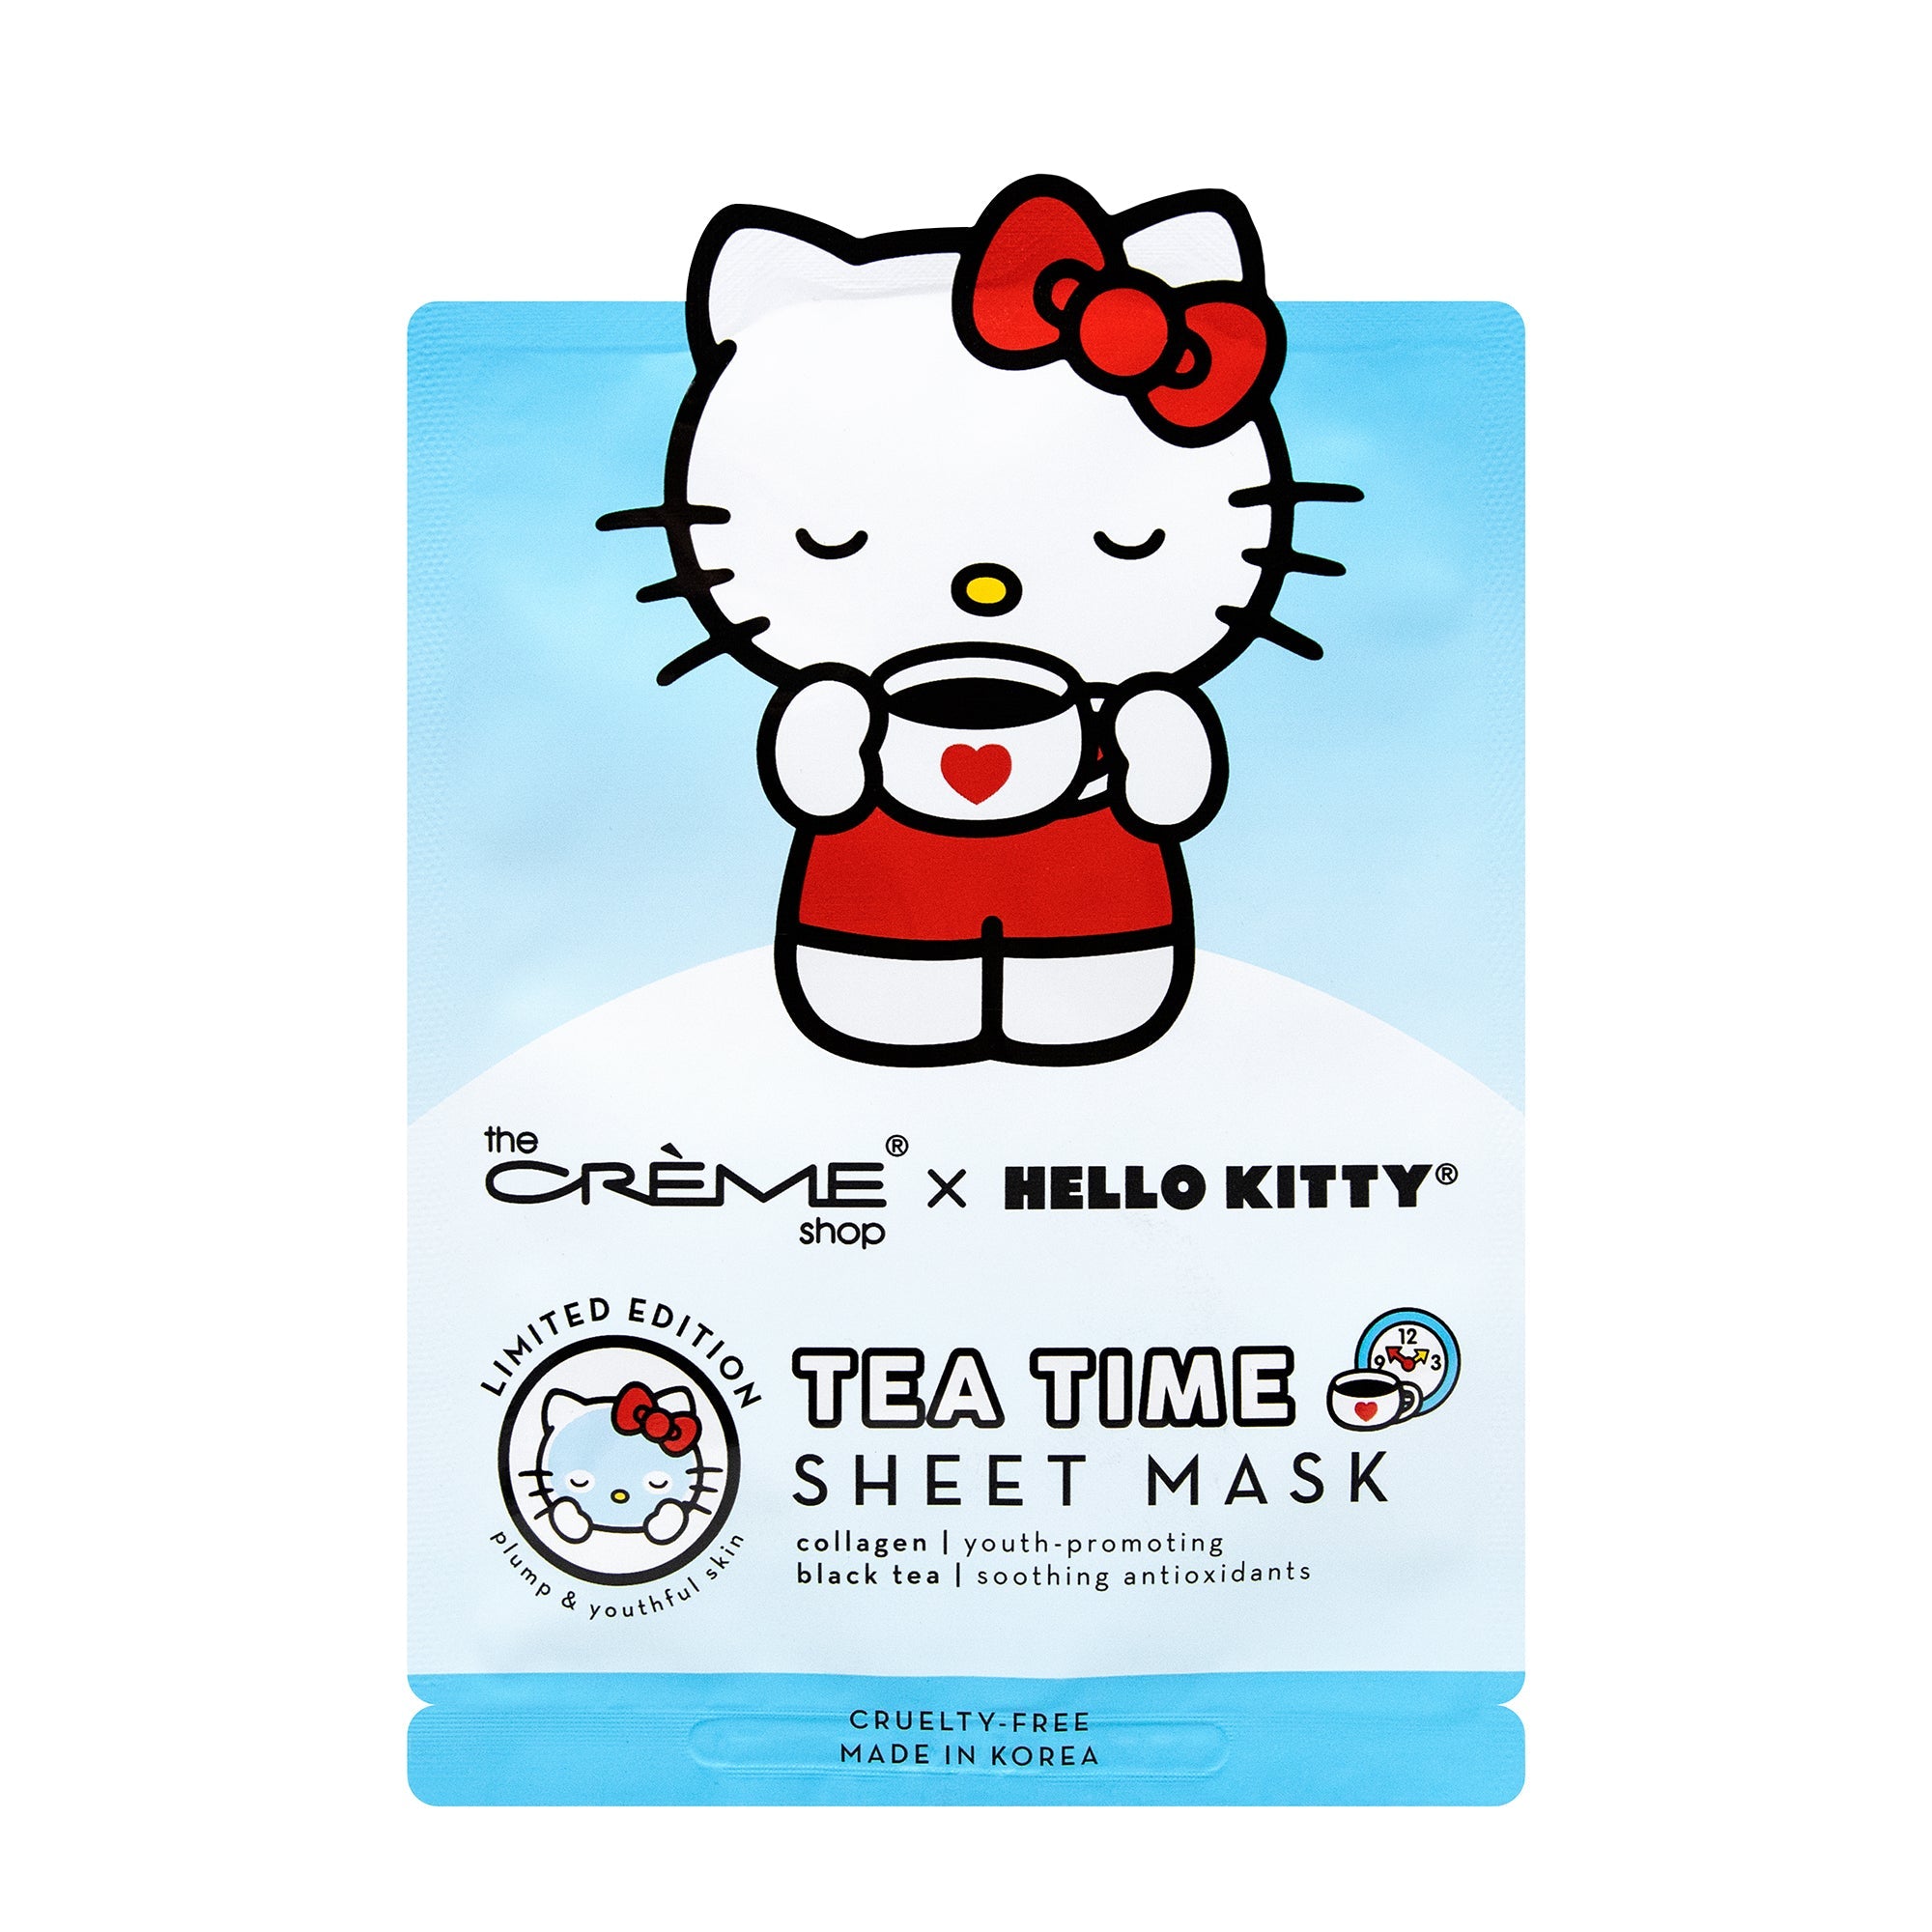 Hello Kitty Sole Soft! Infused Cozy Socks - Sweetheart